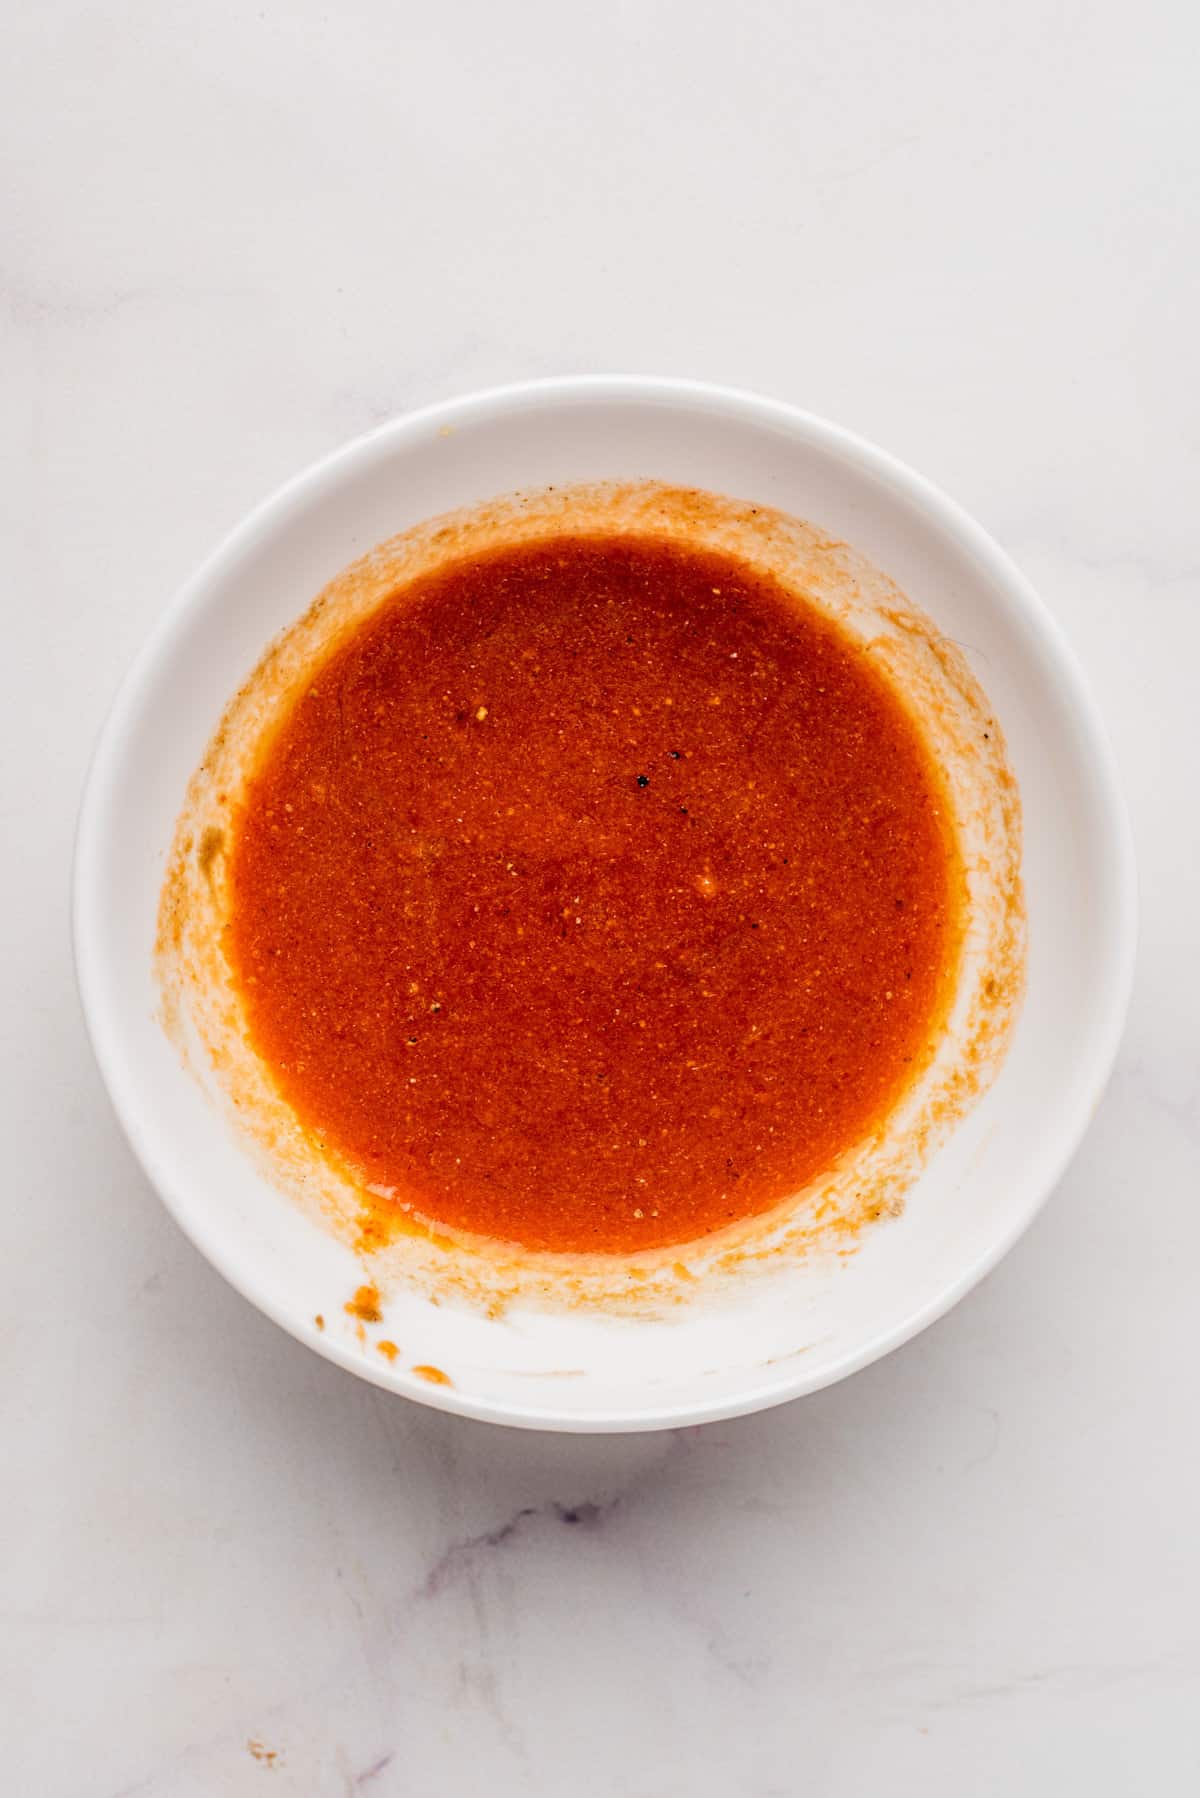 An image of a bowl of homemade buffalo sauce